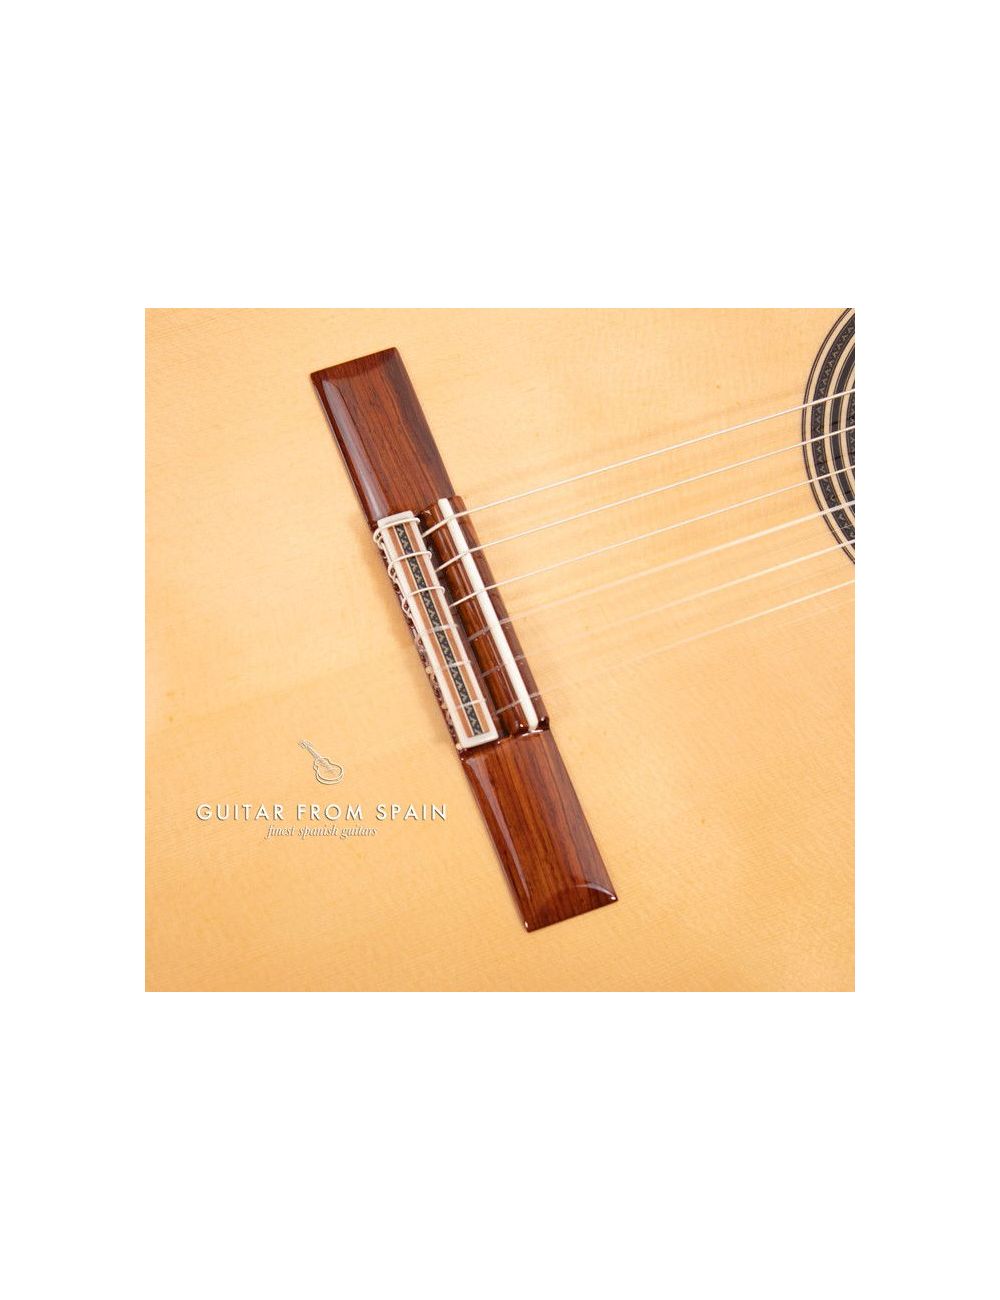 Alhambra Linea Profesional Classical guitar LINEA PROFESIONAL Premium Classical